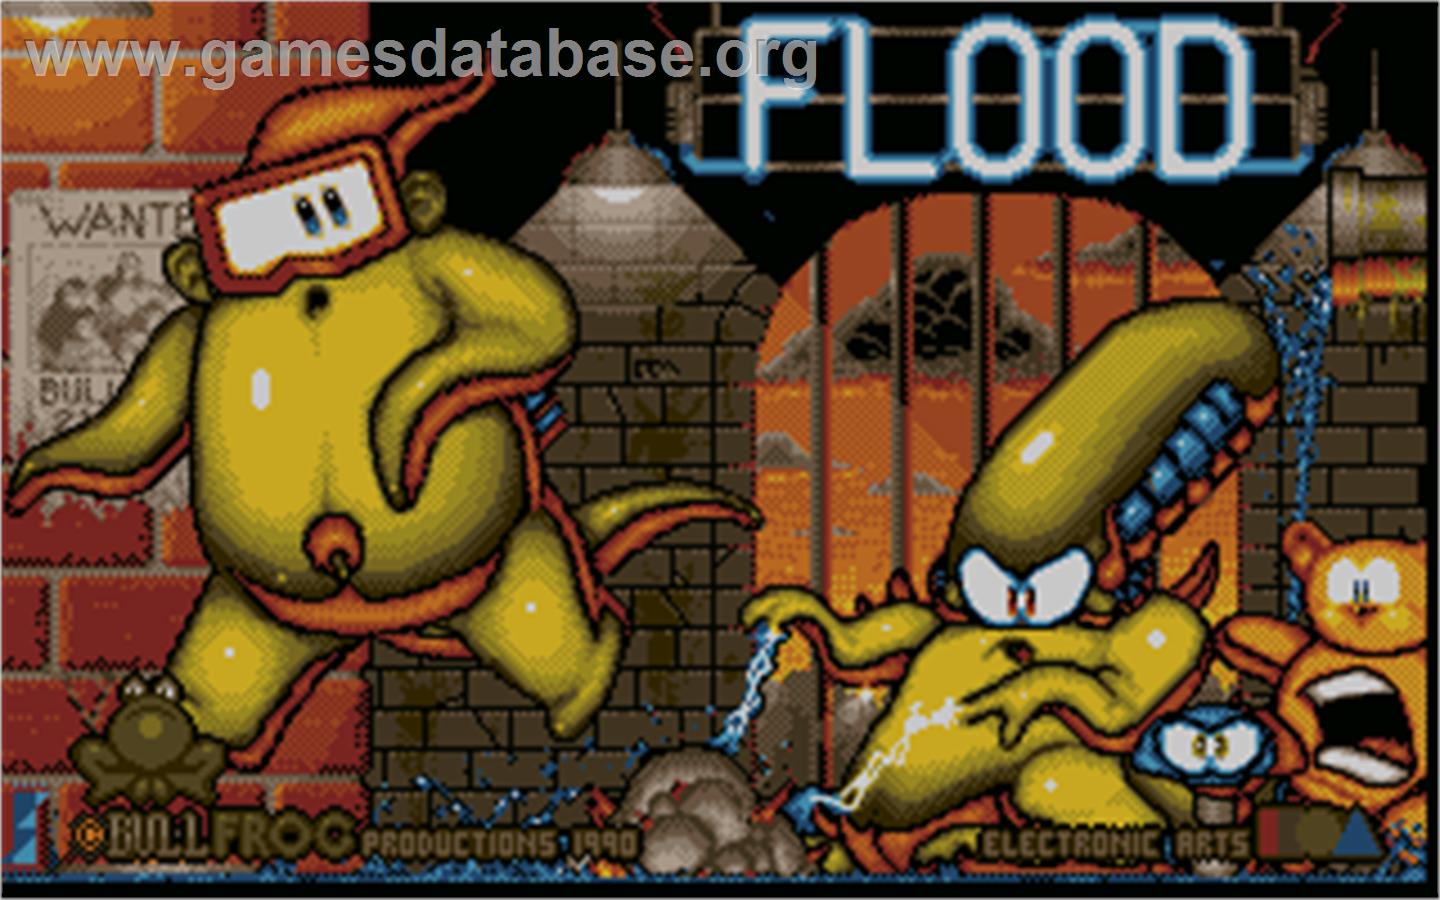 Flood - Atari ST - Artwork - Title Screen